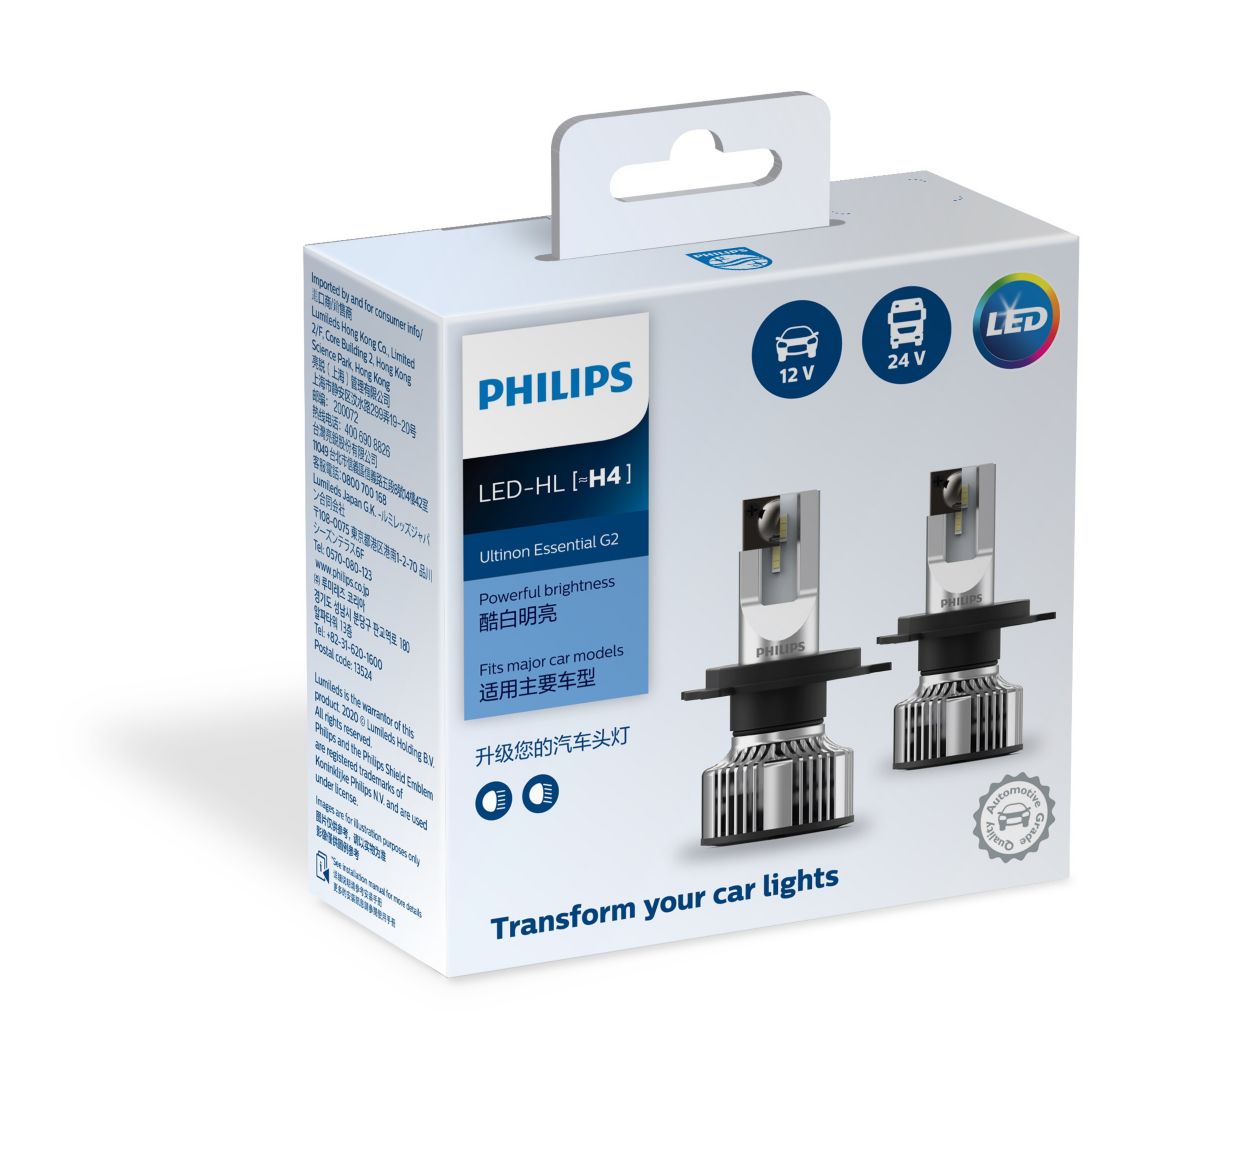 Daylights Austria - Philips H4 / H19 LED Ultinon Access Headlight 6000K  Duobox